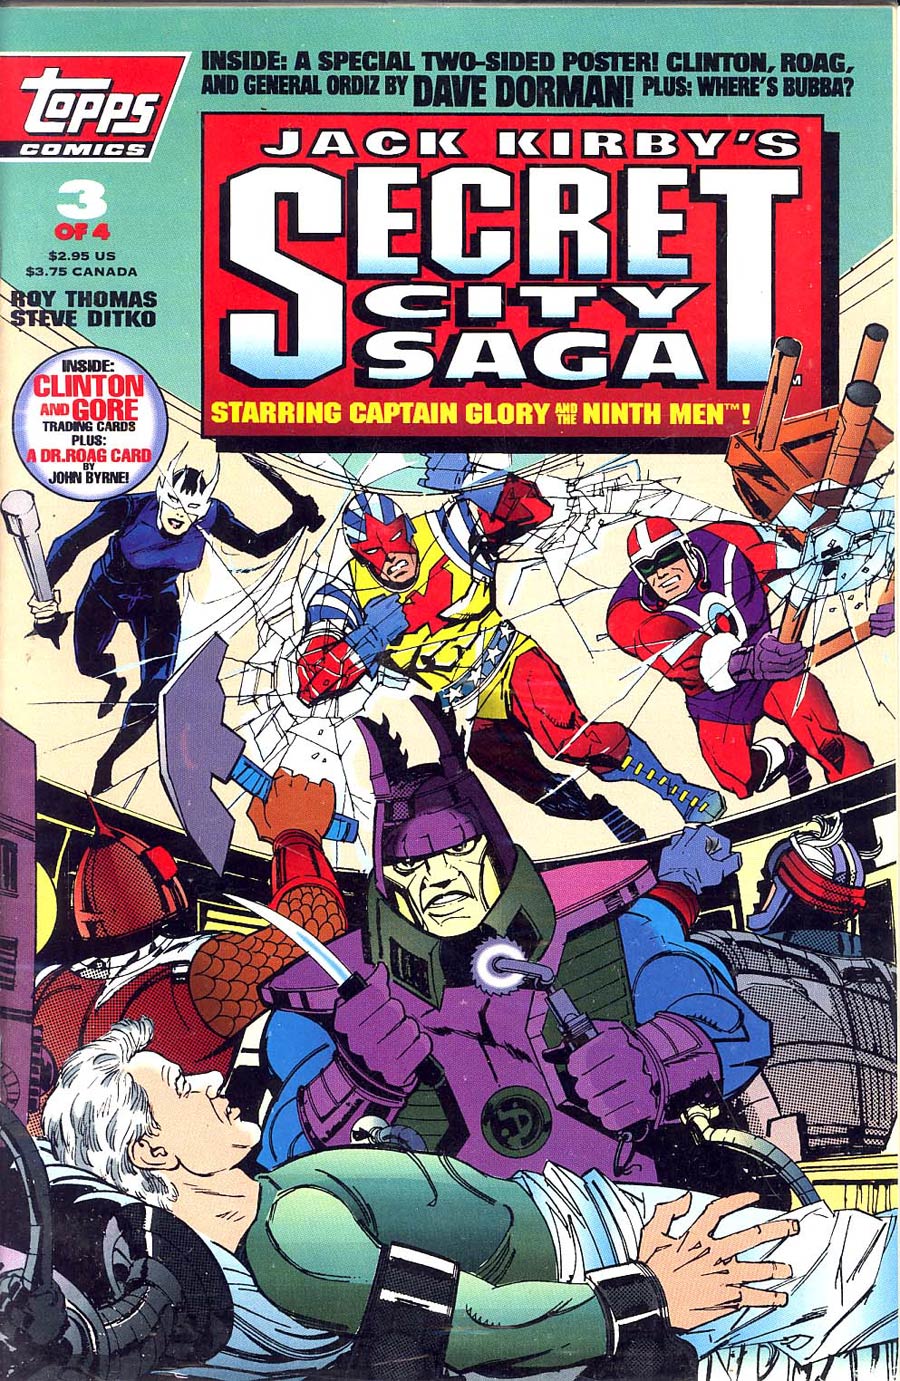 Jack Kirbys Secret City Saga #3 Cover B Without Polybag